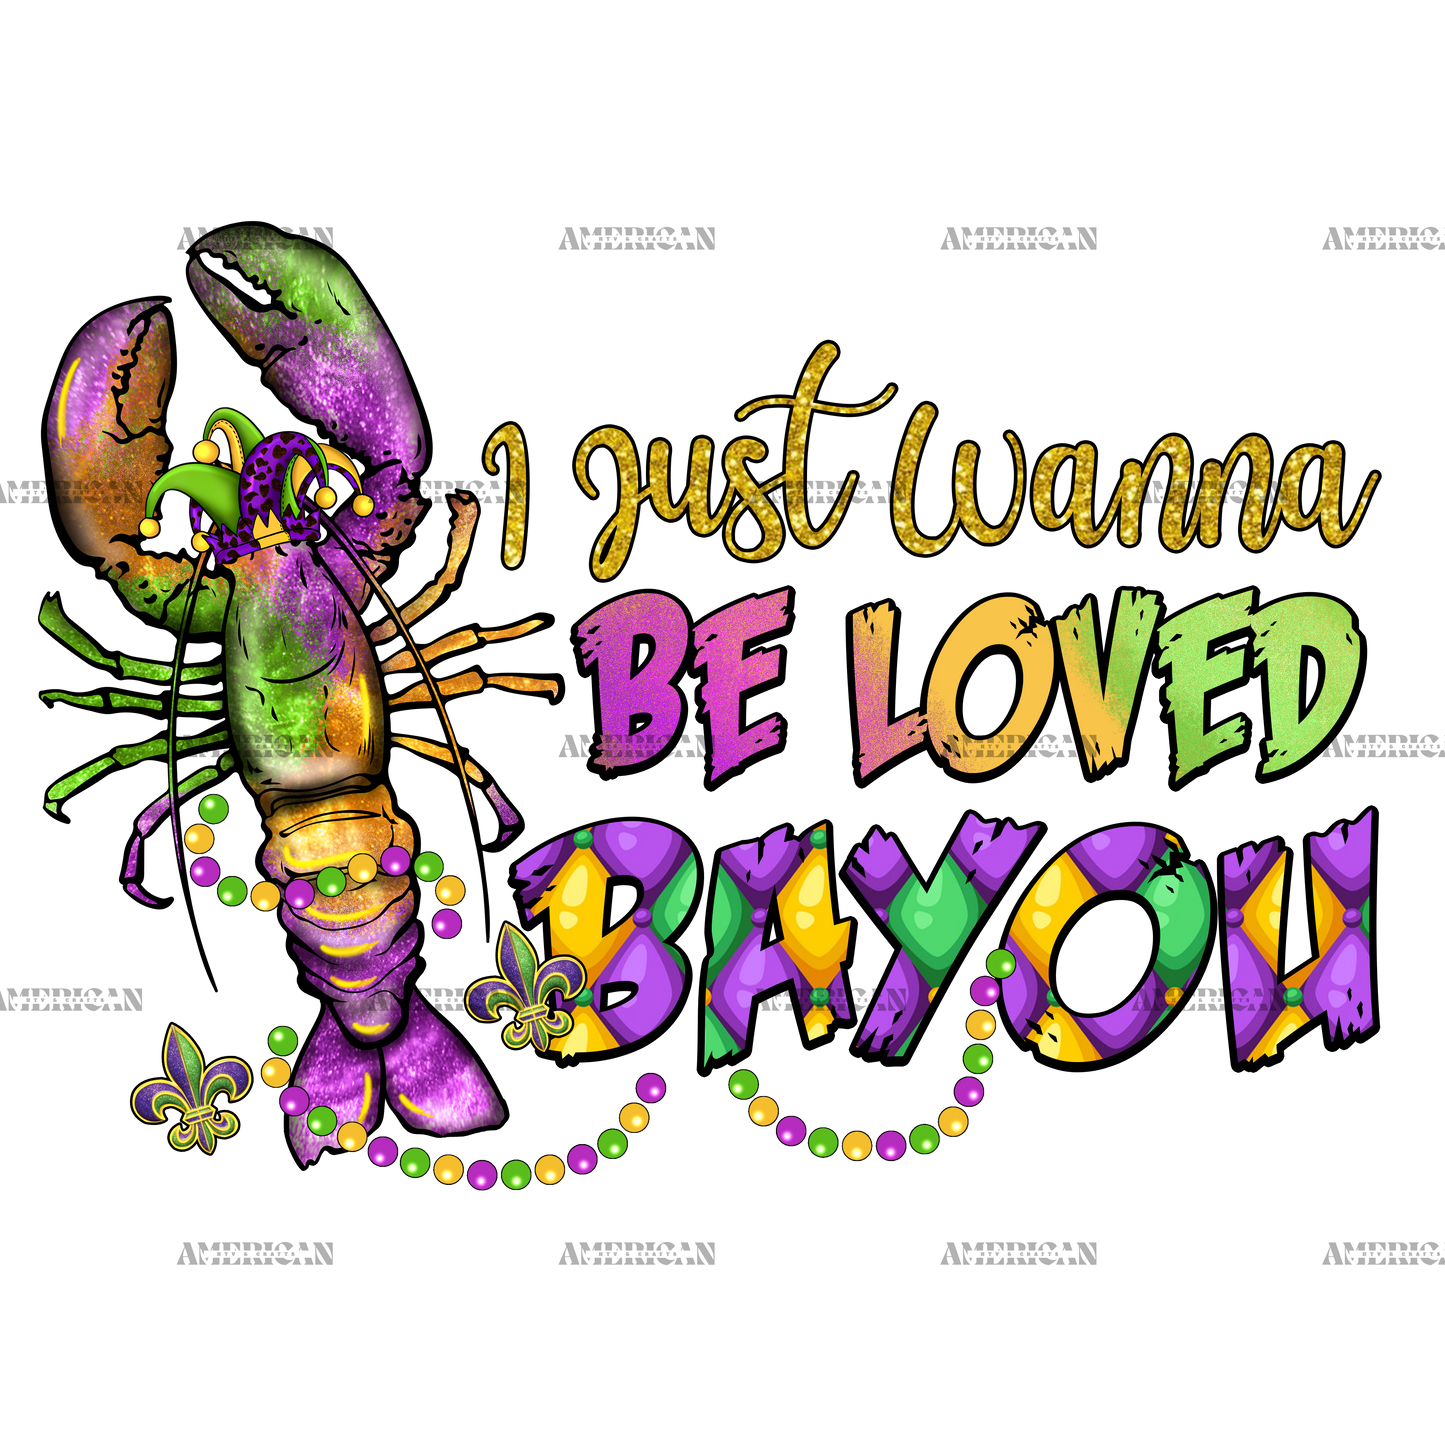 I Just Wanna Be Loved Bayou DTF Transfer